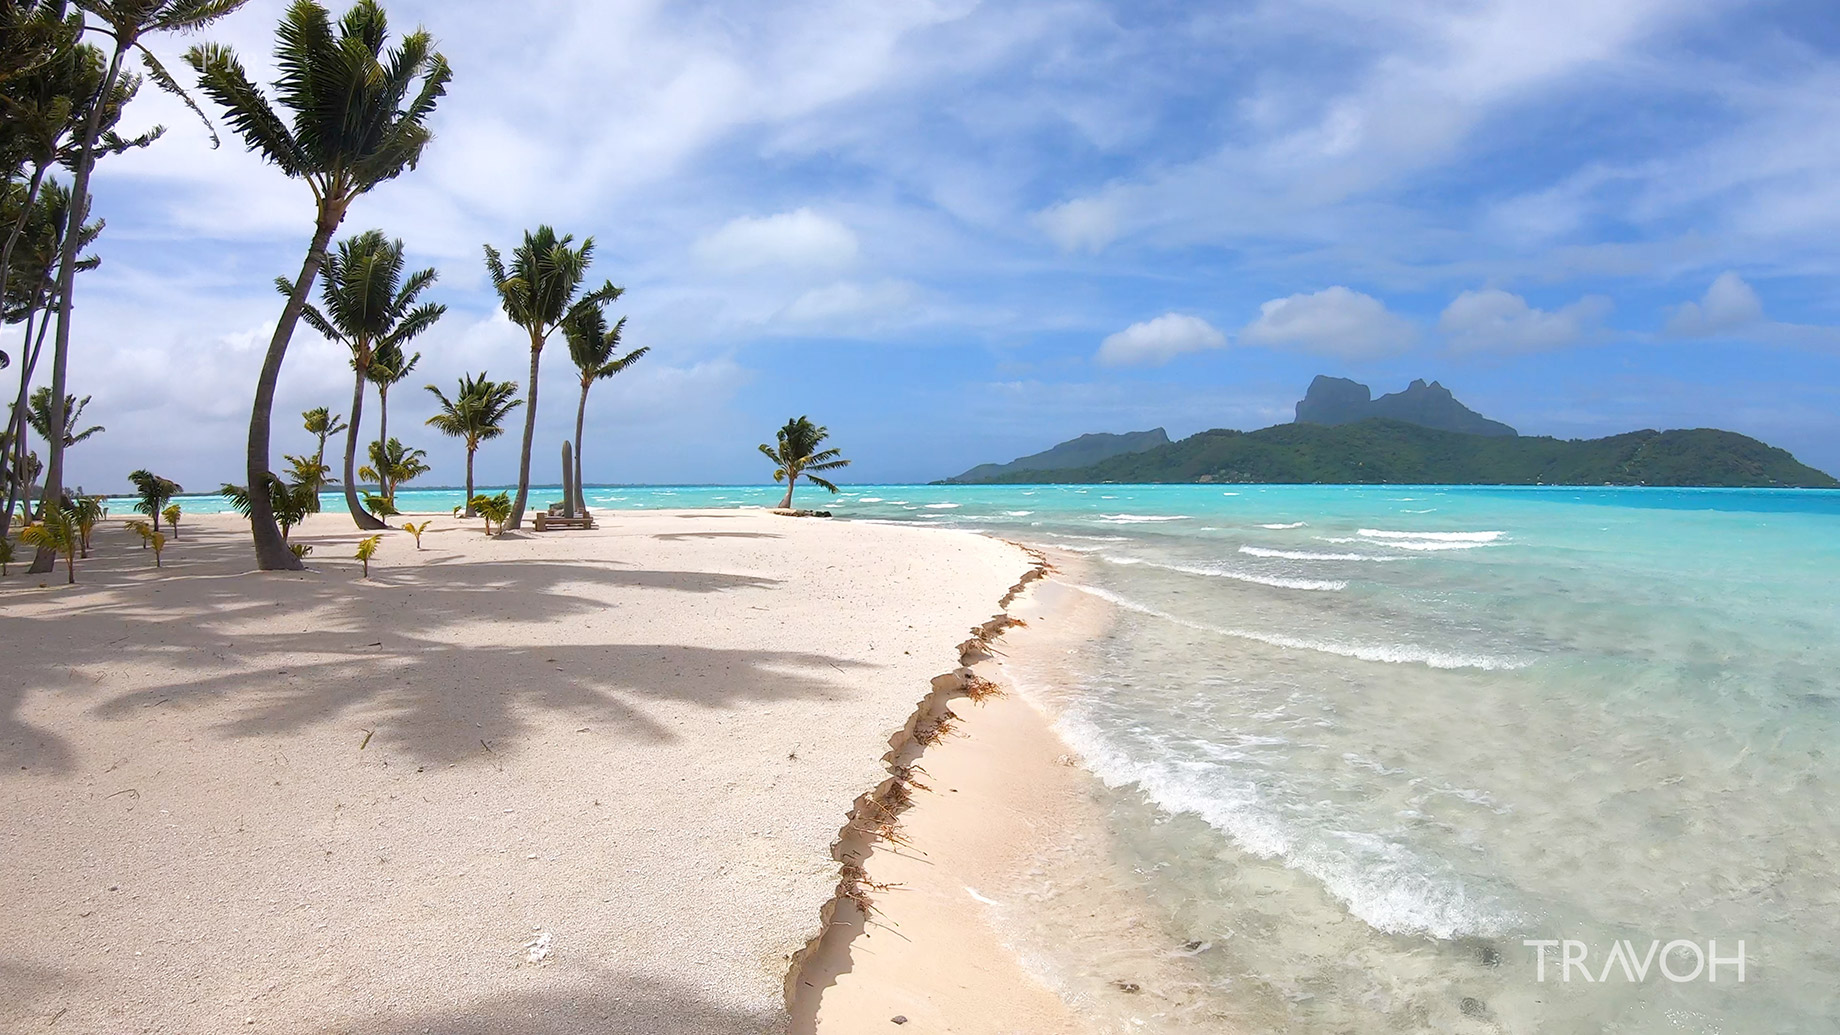 Tropical Island Walk - Ocean Beach Nature - Motu Tane - Bora Bora, French Polynesia - 4K Travel Video